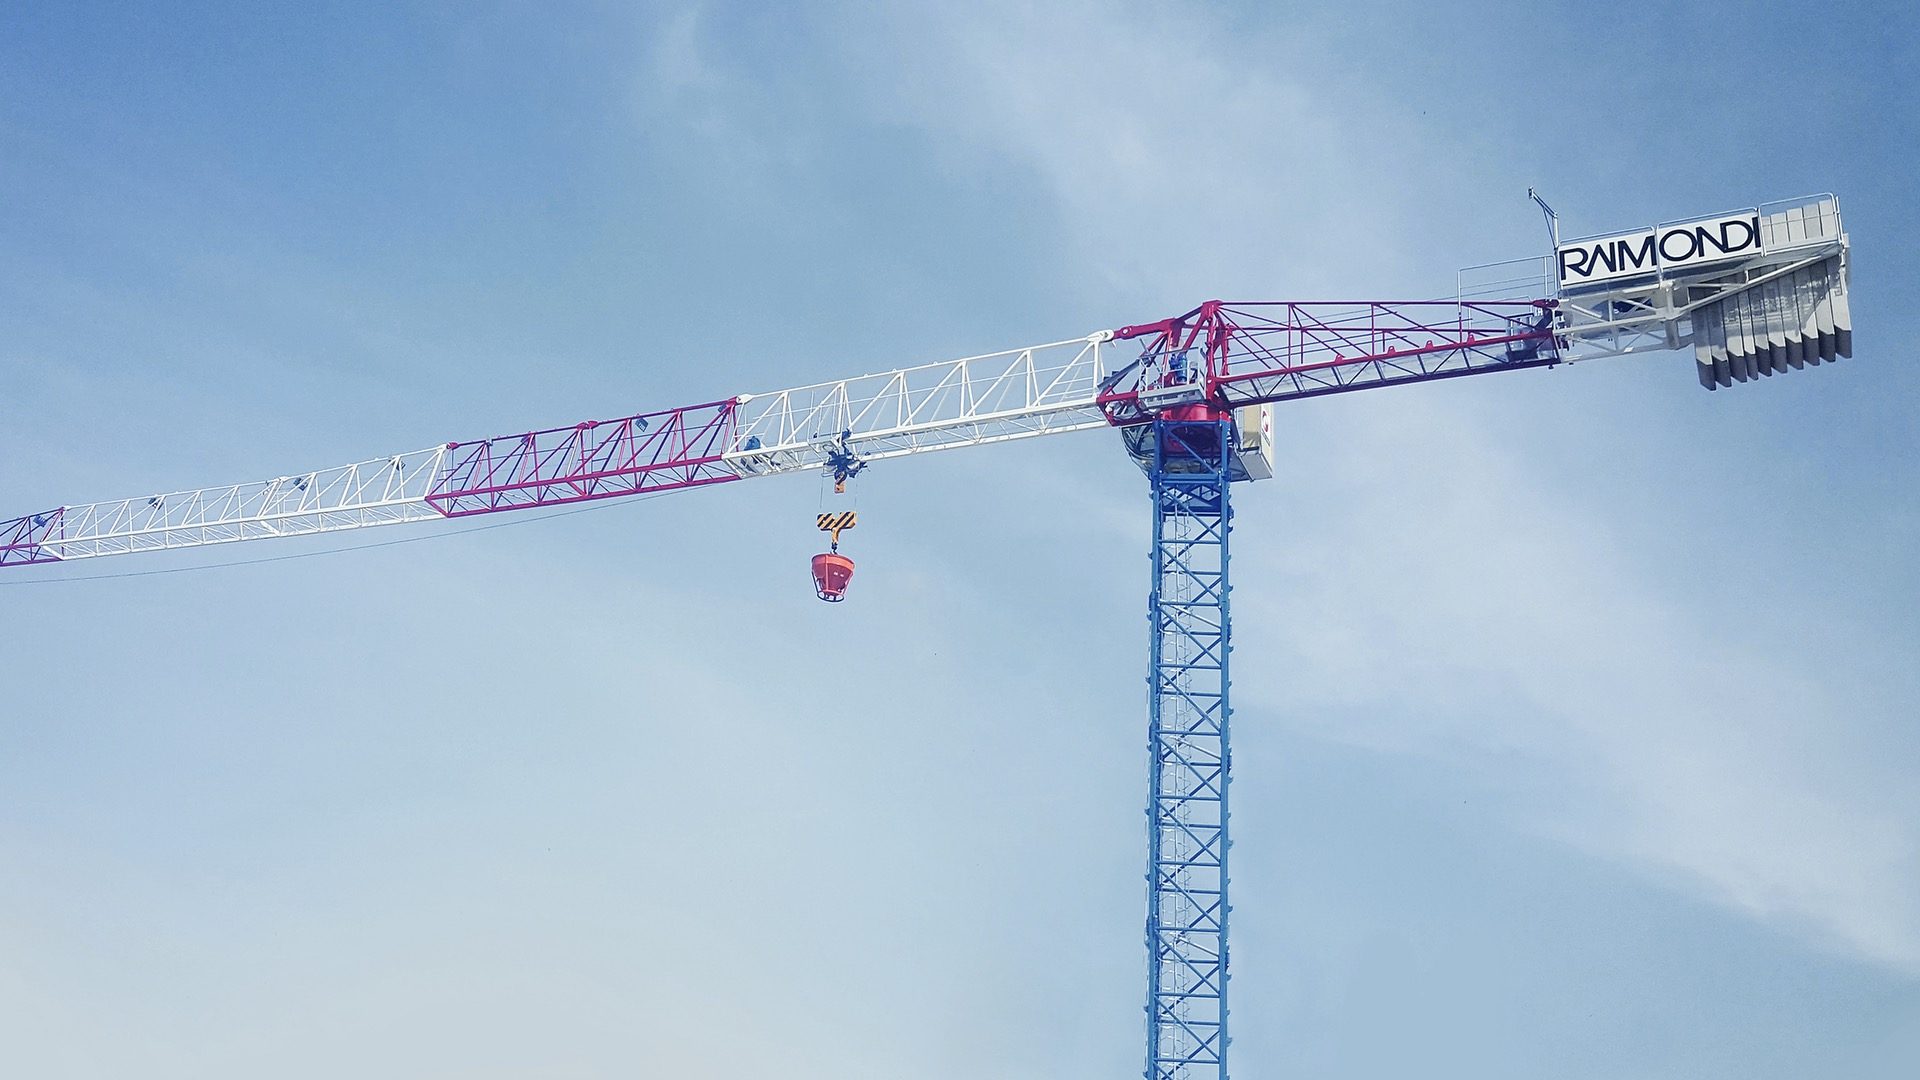 Raimondi Cranes MRT159 featured in the global construction media